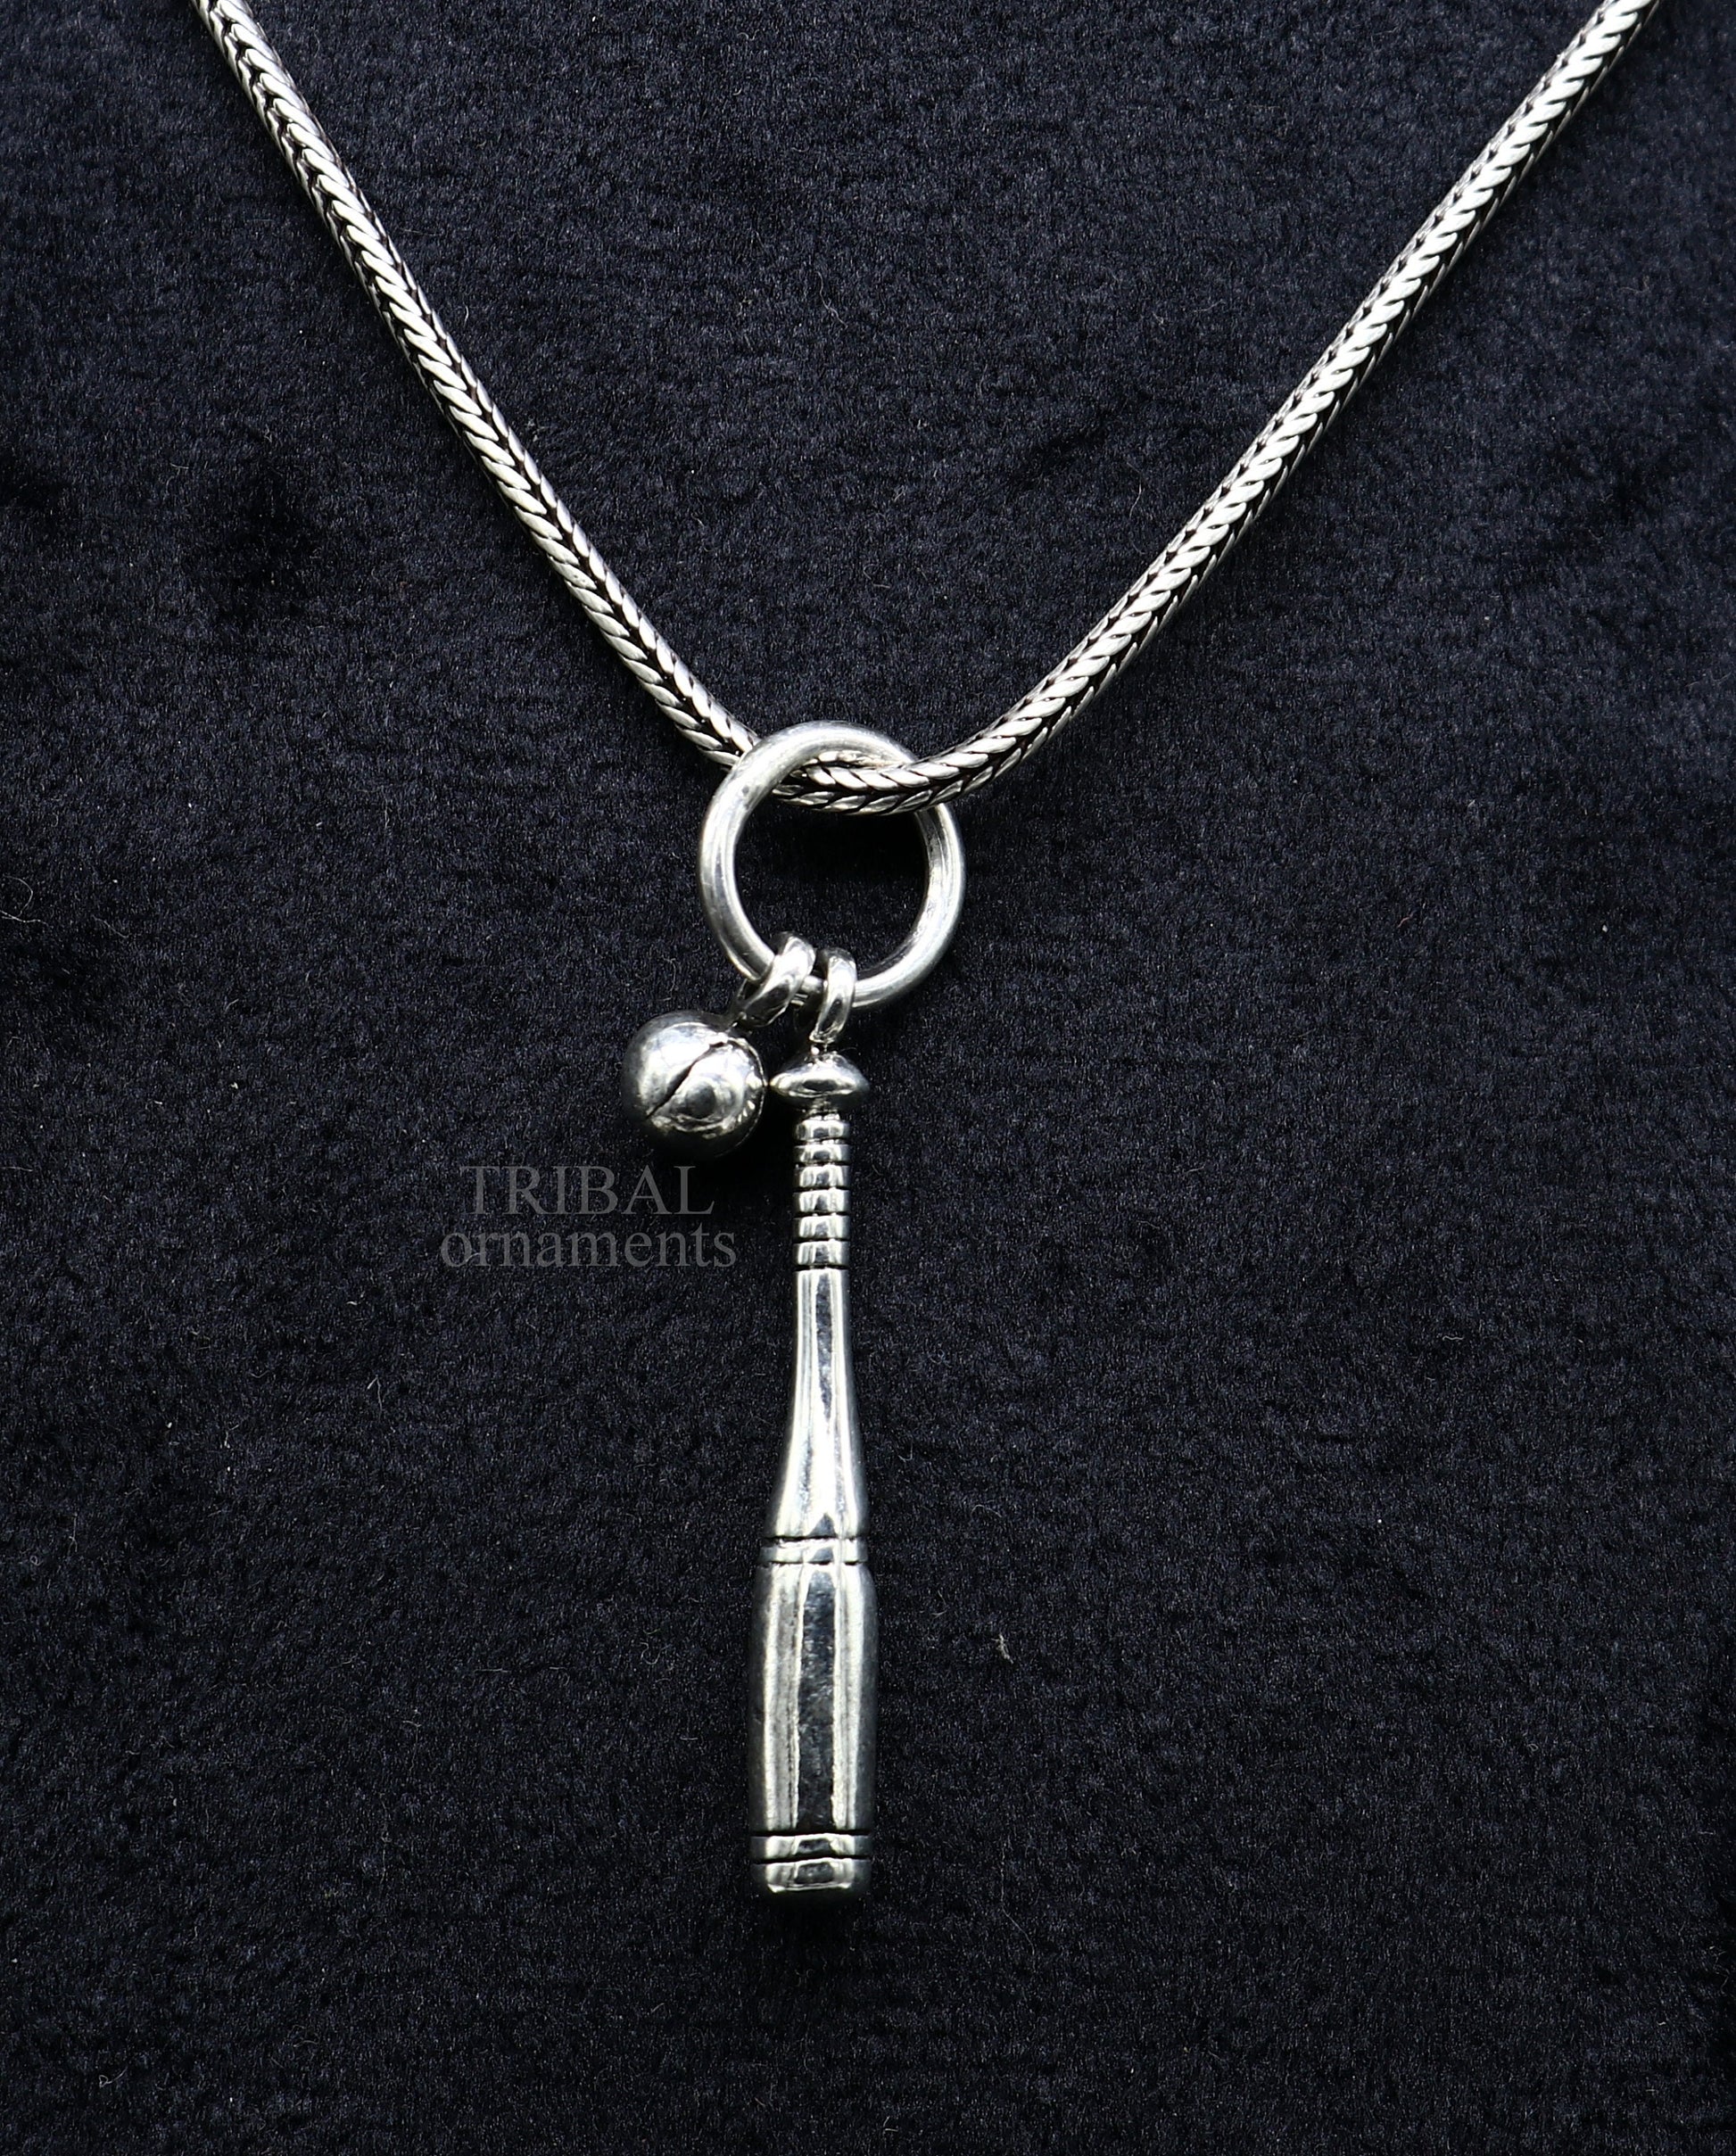 925 sterling silver handmade amazing small baseball bat and ball design pendant, amazing stylish unisex pendant tribal jewelry ssp1579 - TRIBAL ORNAMENTS